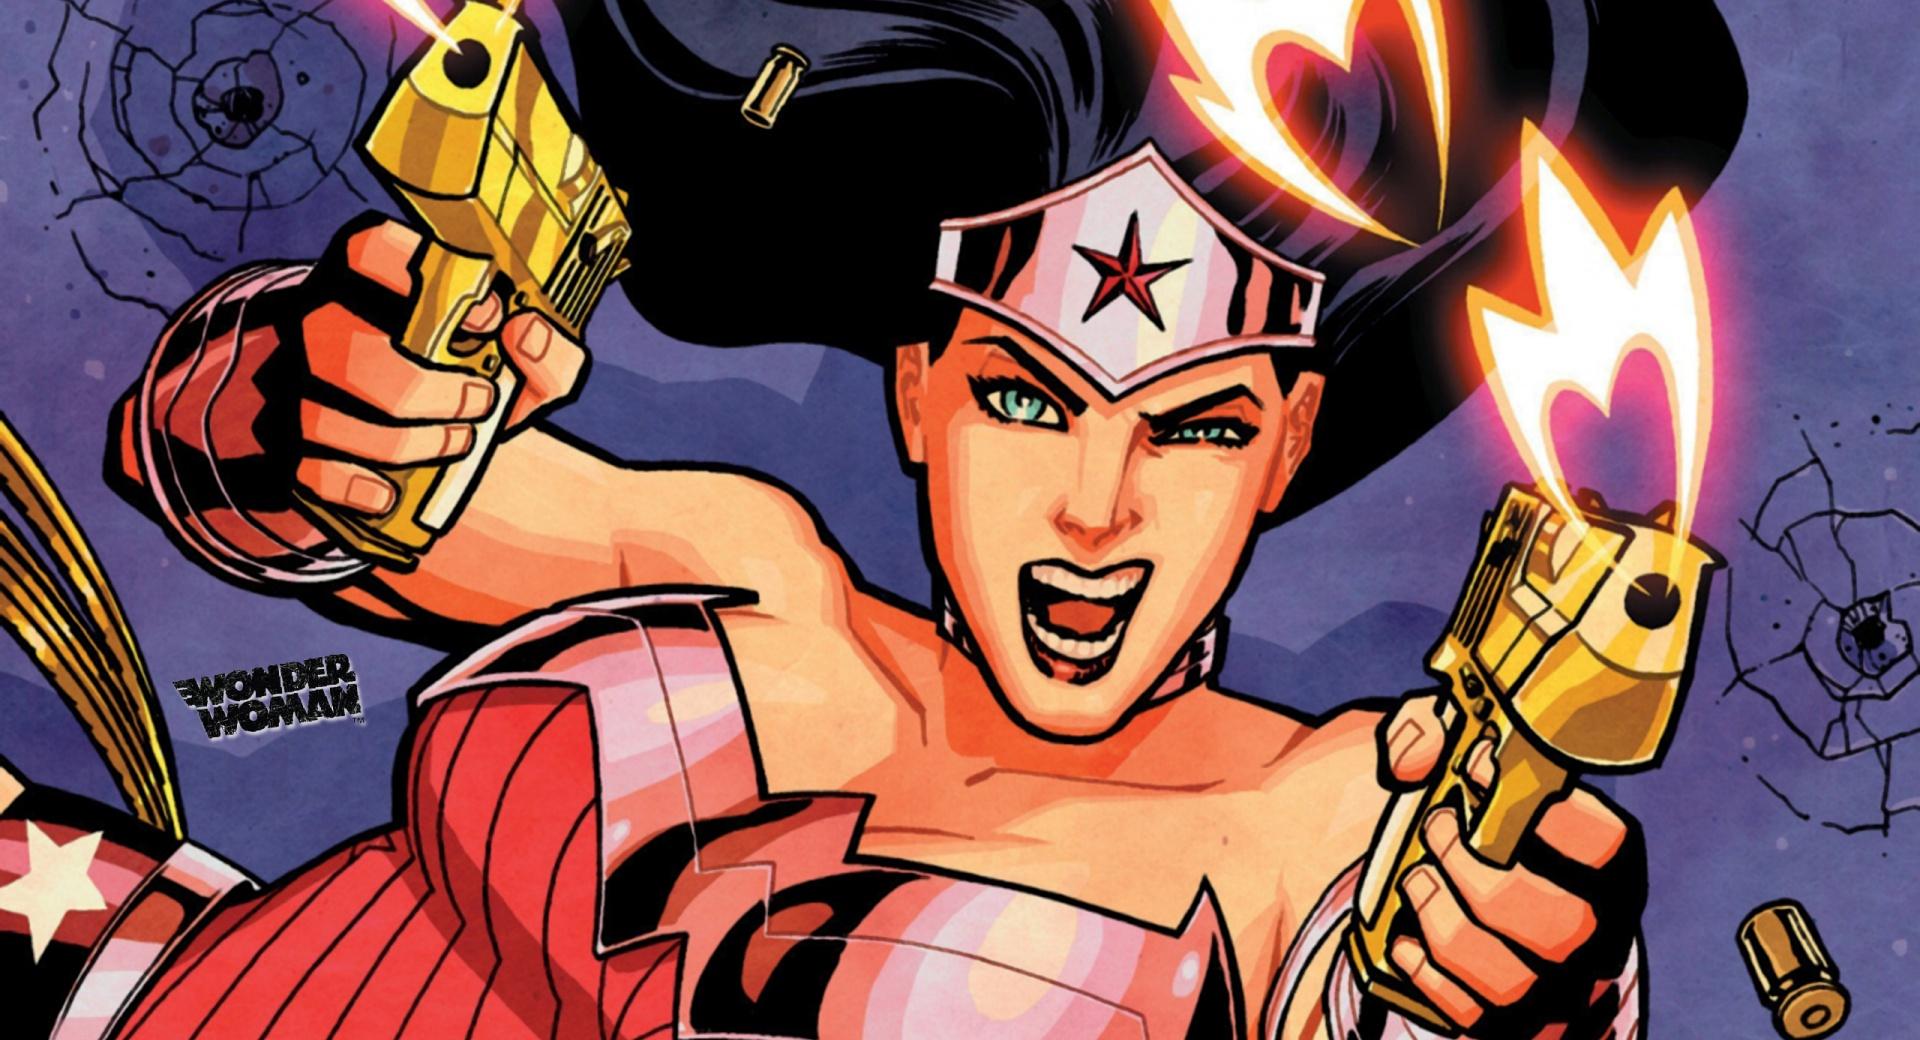 Wonder Woman Gunfight at 2048 x 2048 iPad size wallpapers HD quality